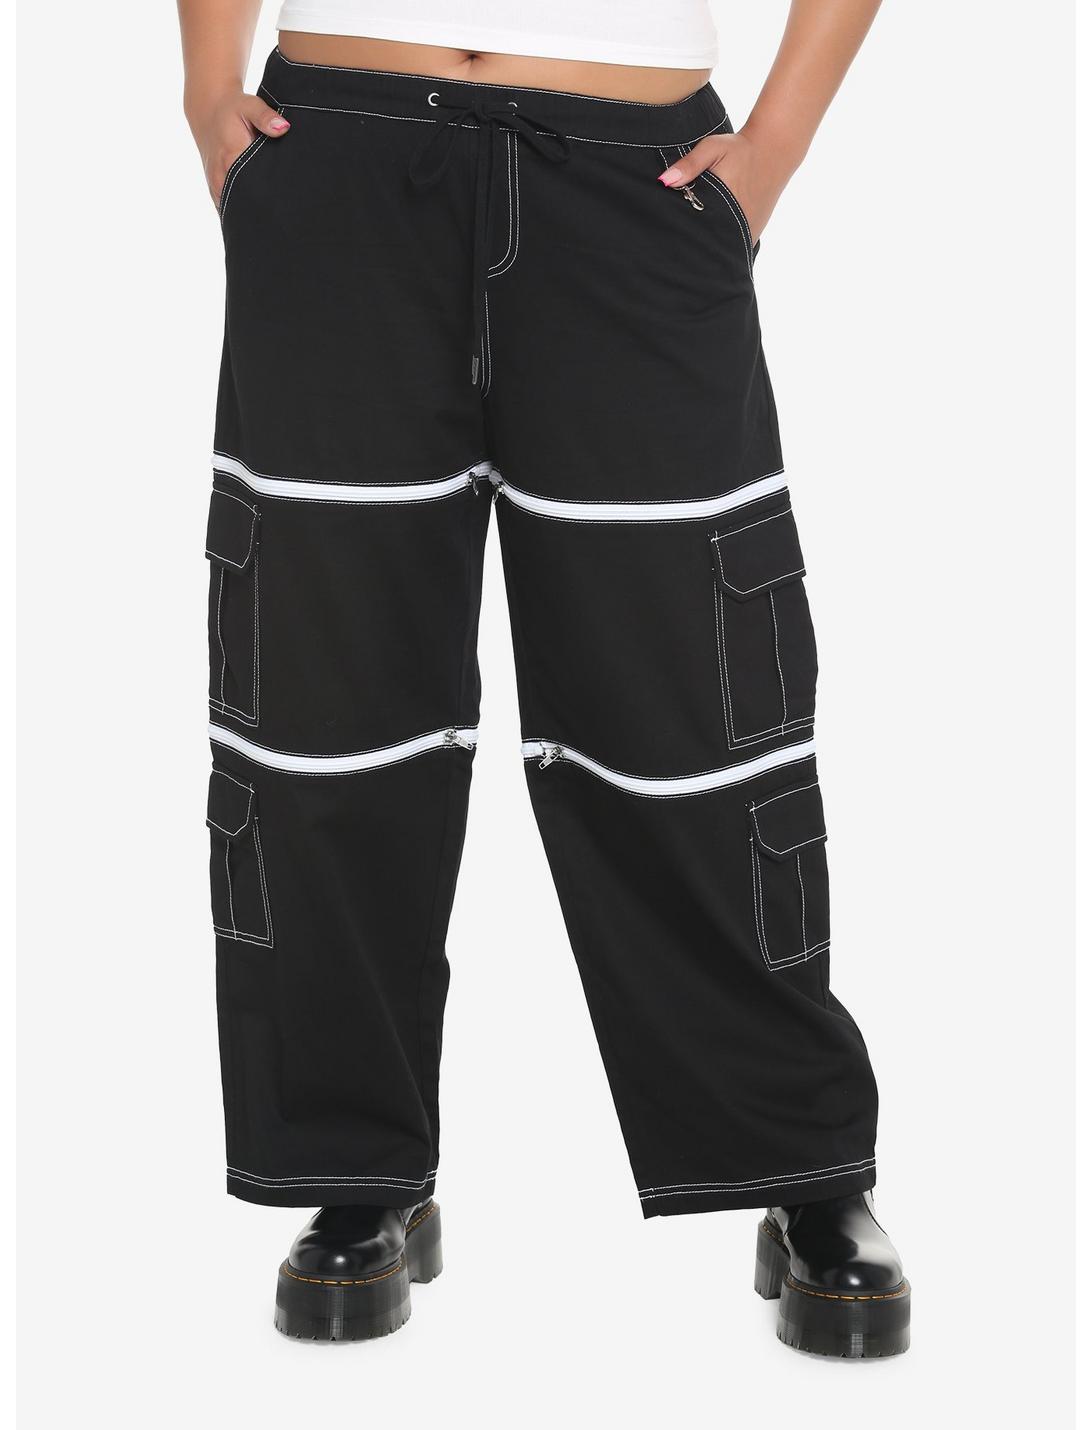 Black & White Zip-Off Carpenter Pants Plus Size